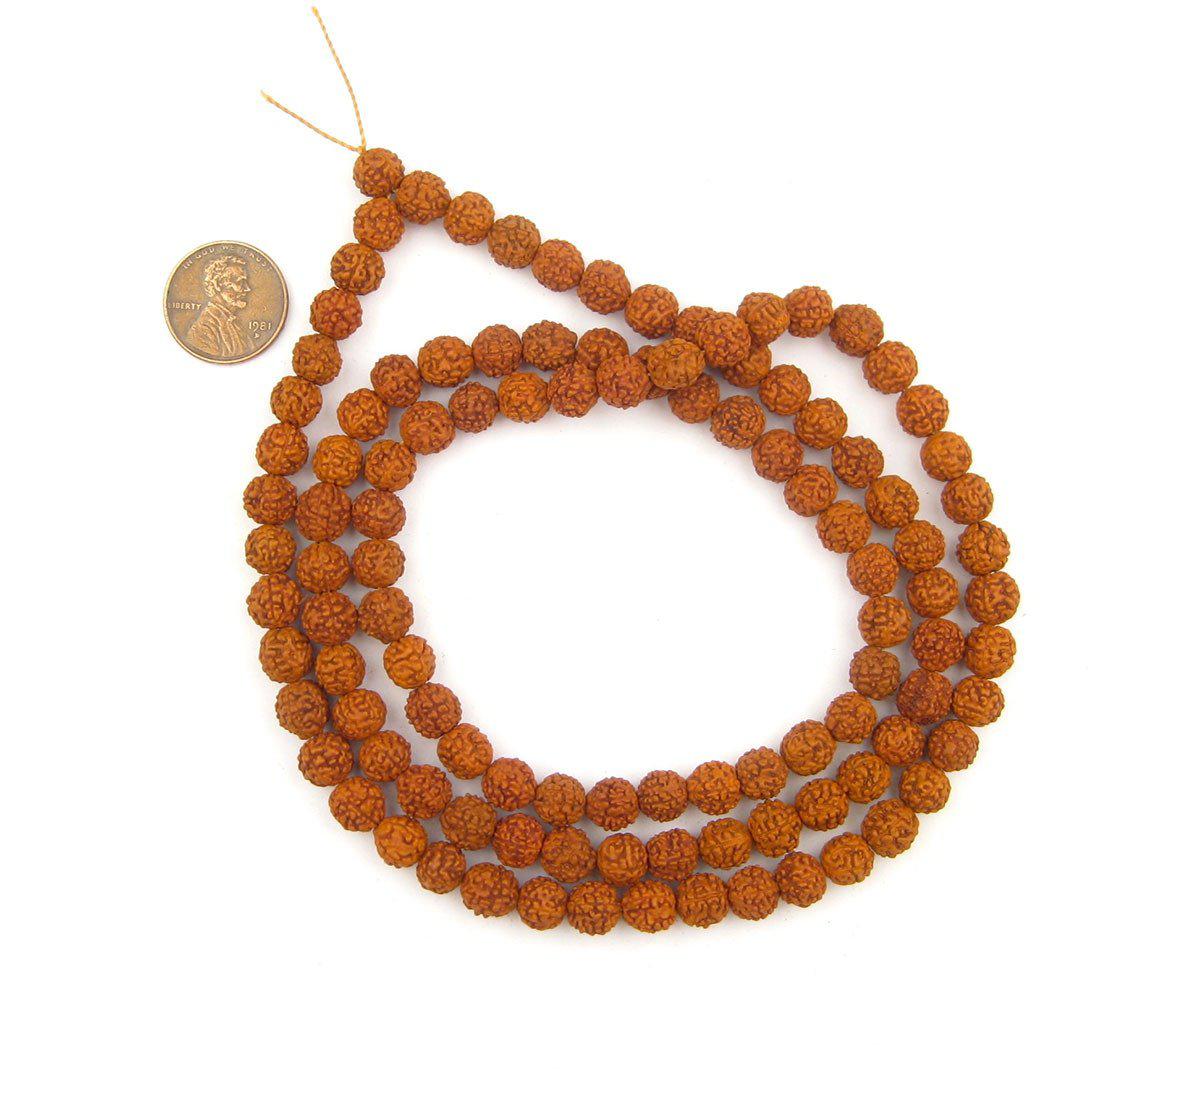 Rudraksha Mala - 108 Prayer Beads - Wholesale and Retail by Prabhuji's Gifts